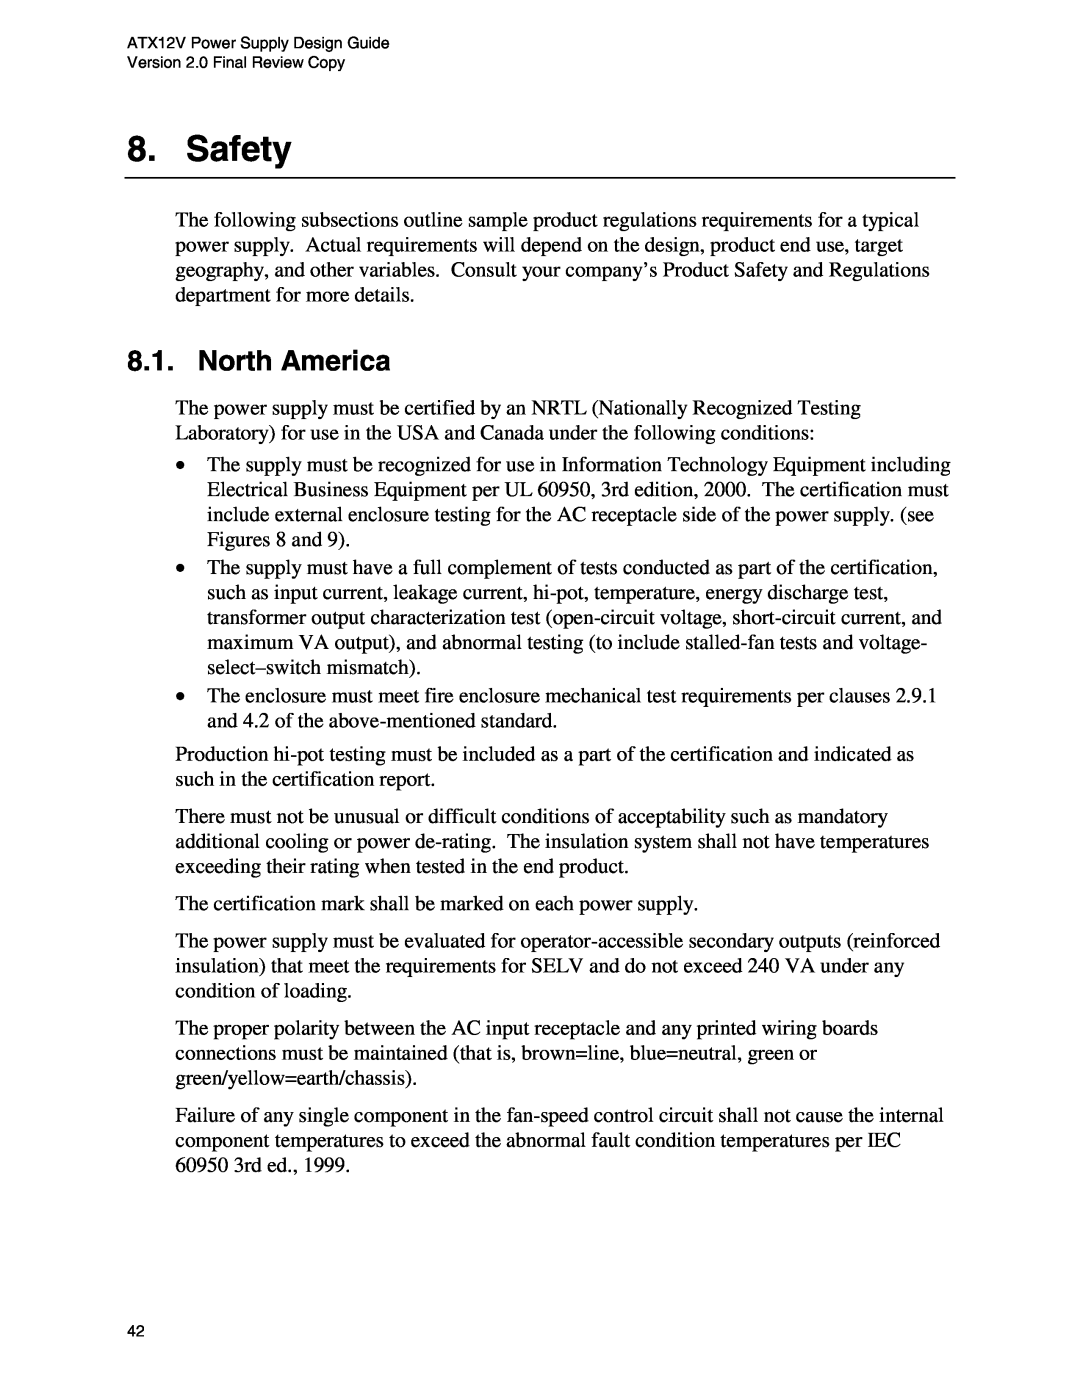 Intel ATX12V manual Safety, North America 